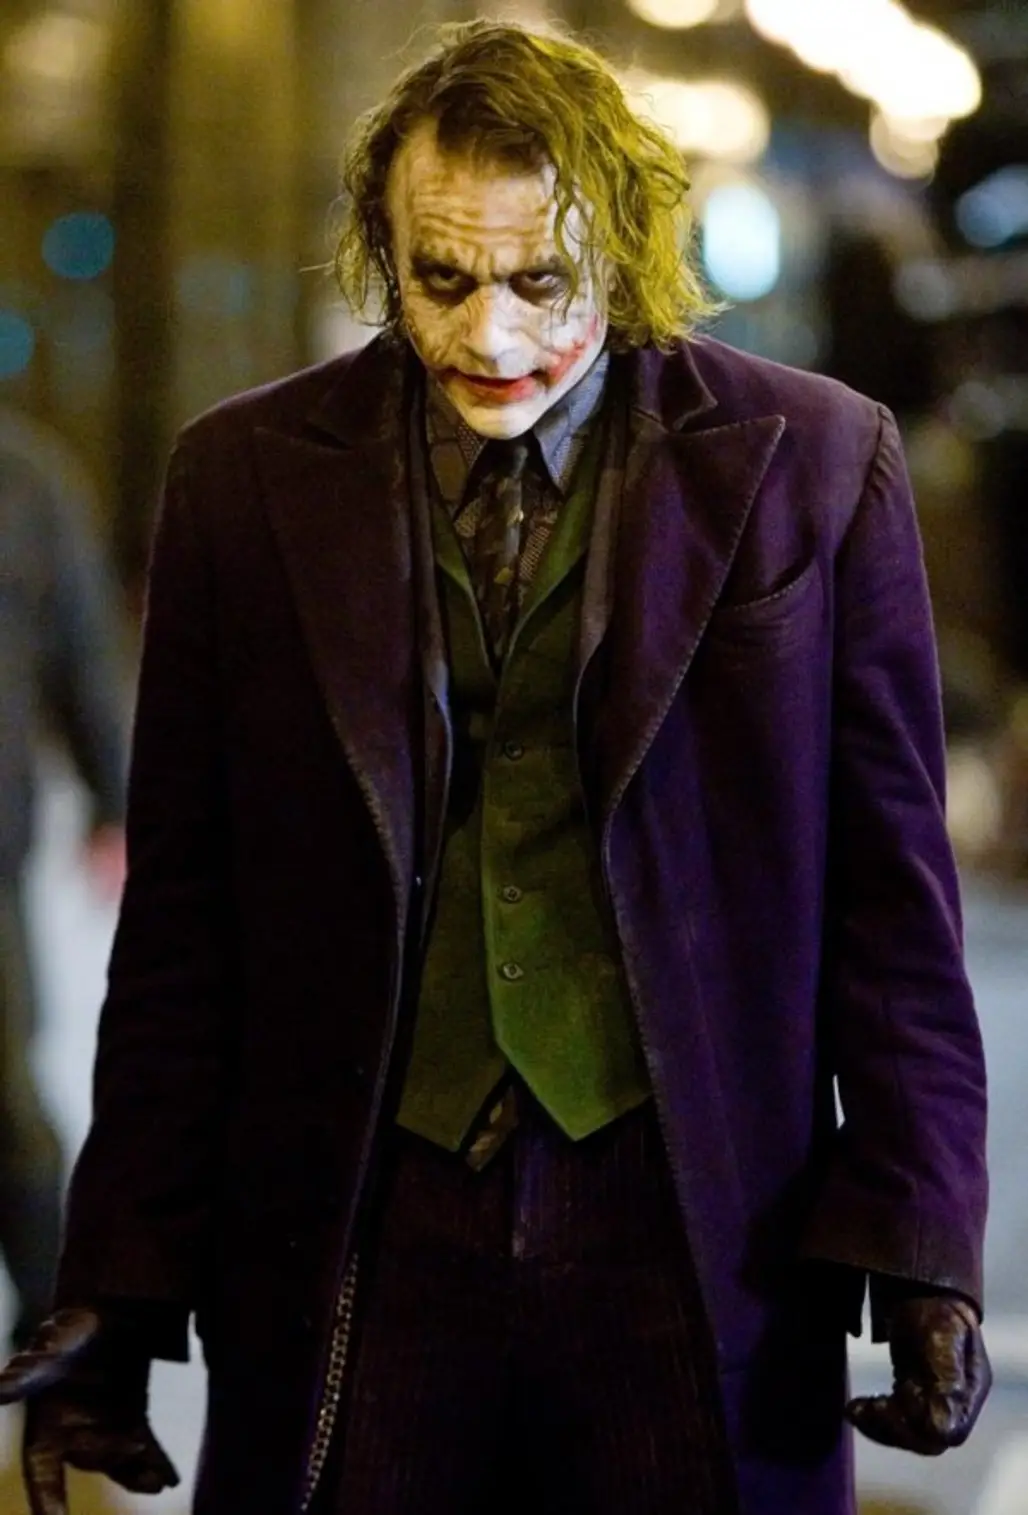 The Joker from the Dark Knight